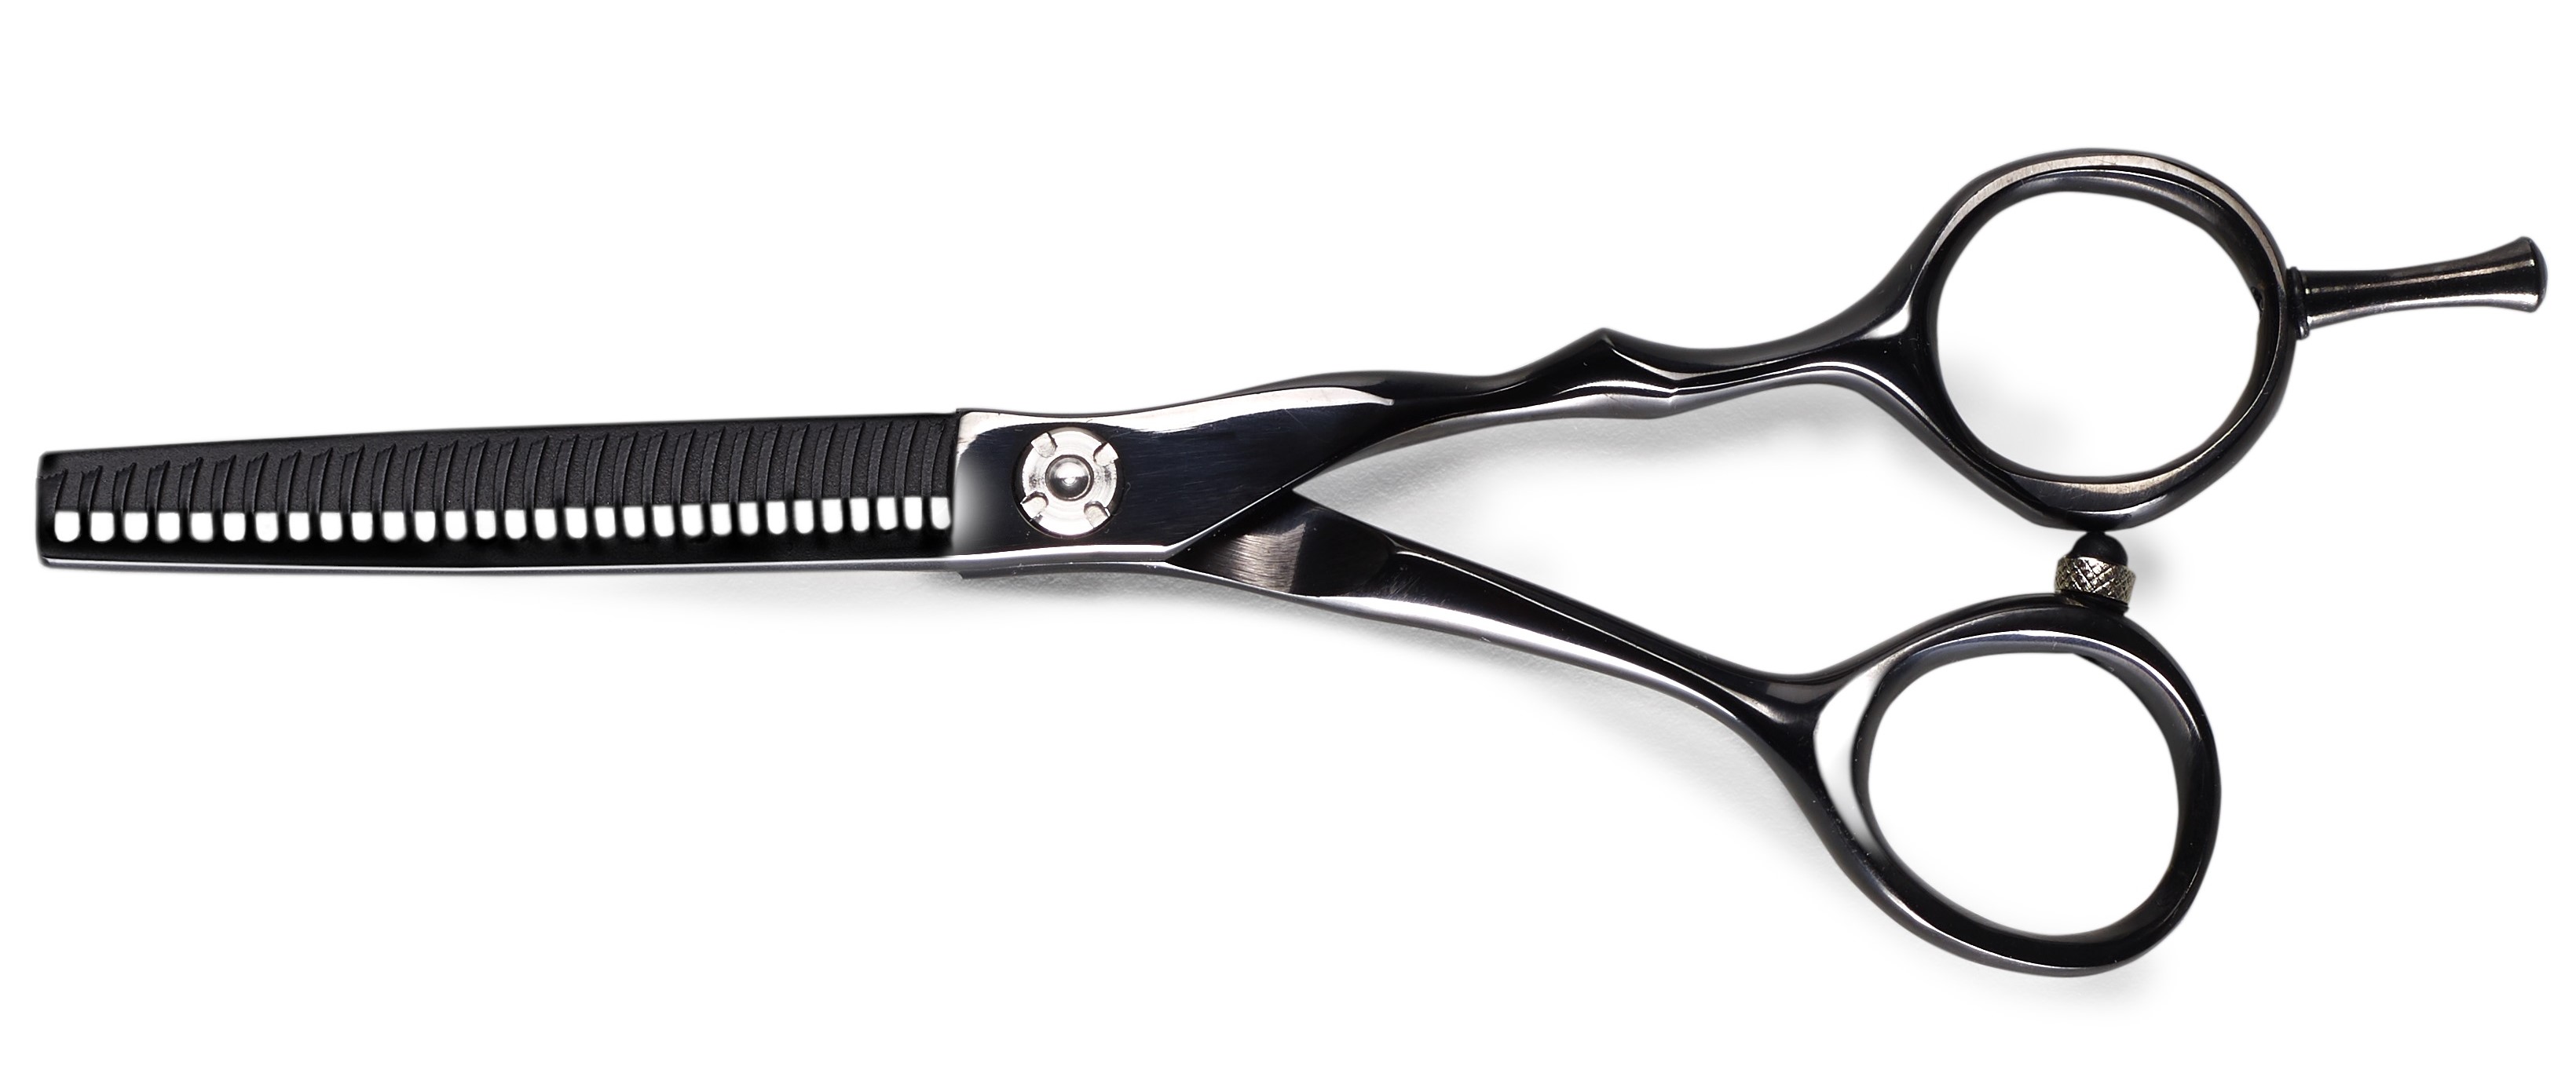 Kiepe Blending Scissors 30 Teeth Regular 2814T30 6″ - profesionální efilační nůžky